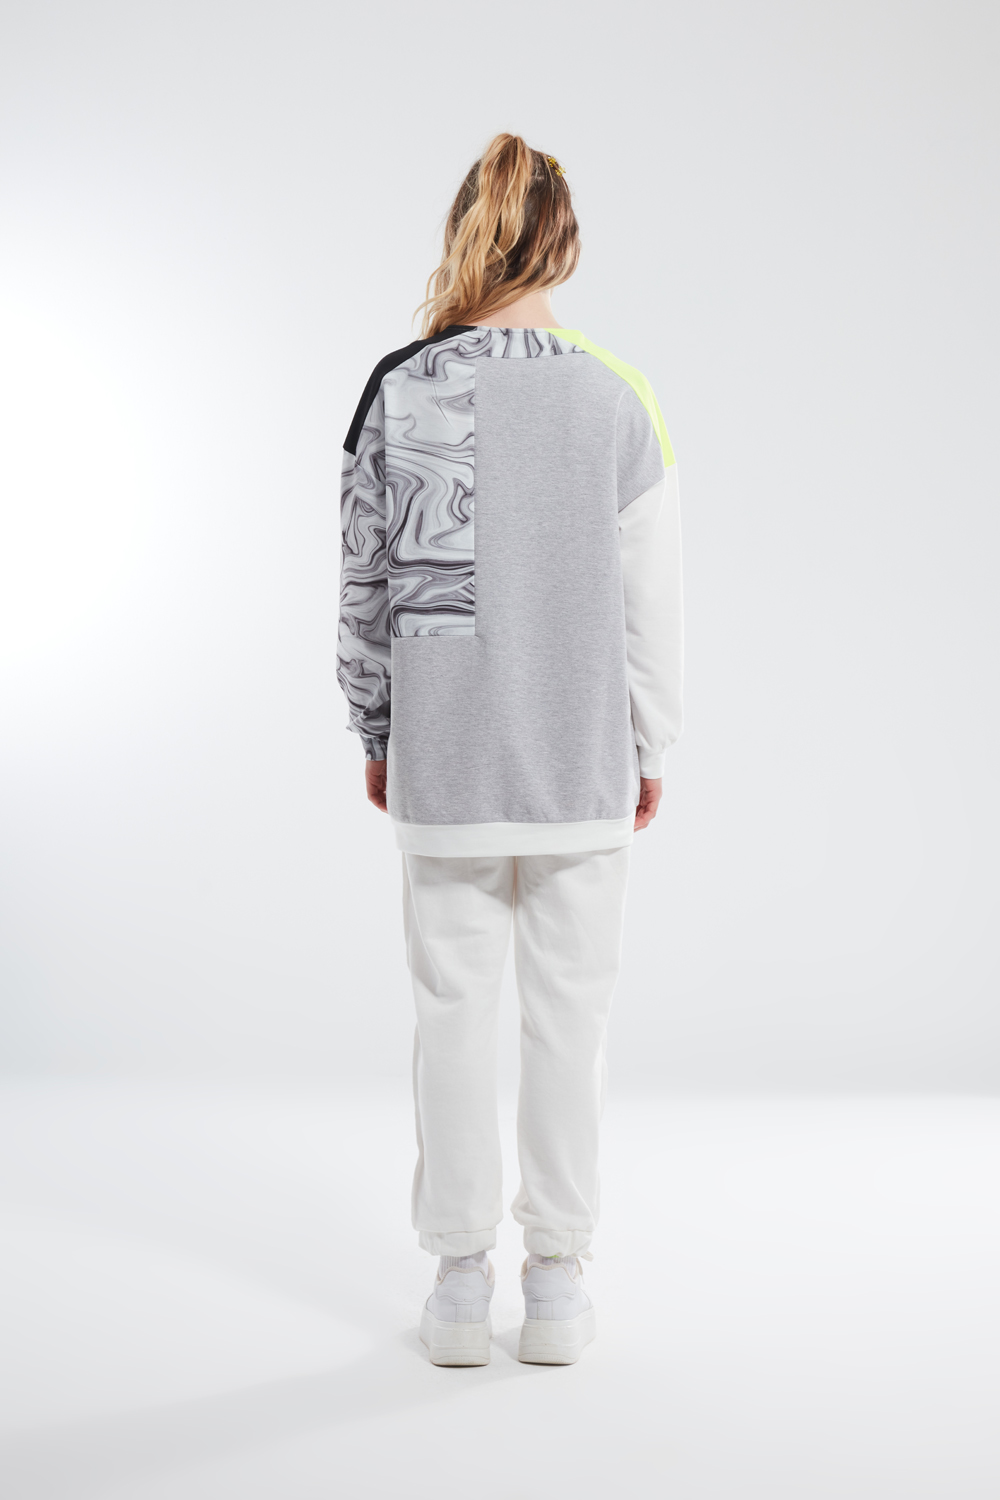 Digital Printed Gray Sweatshirt